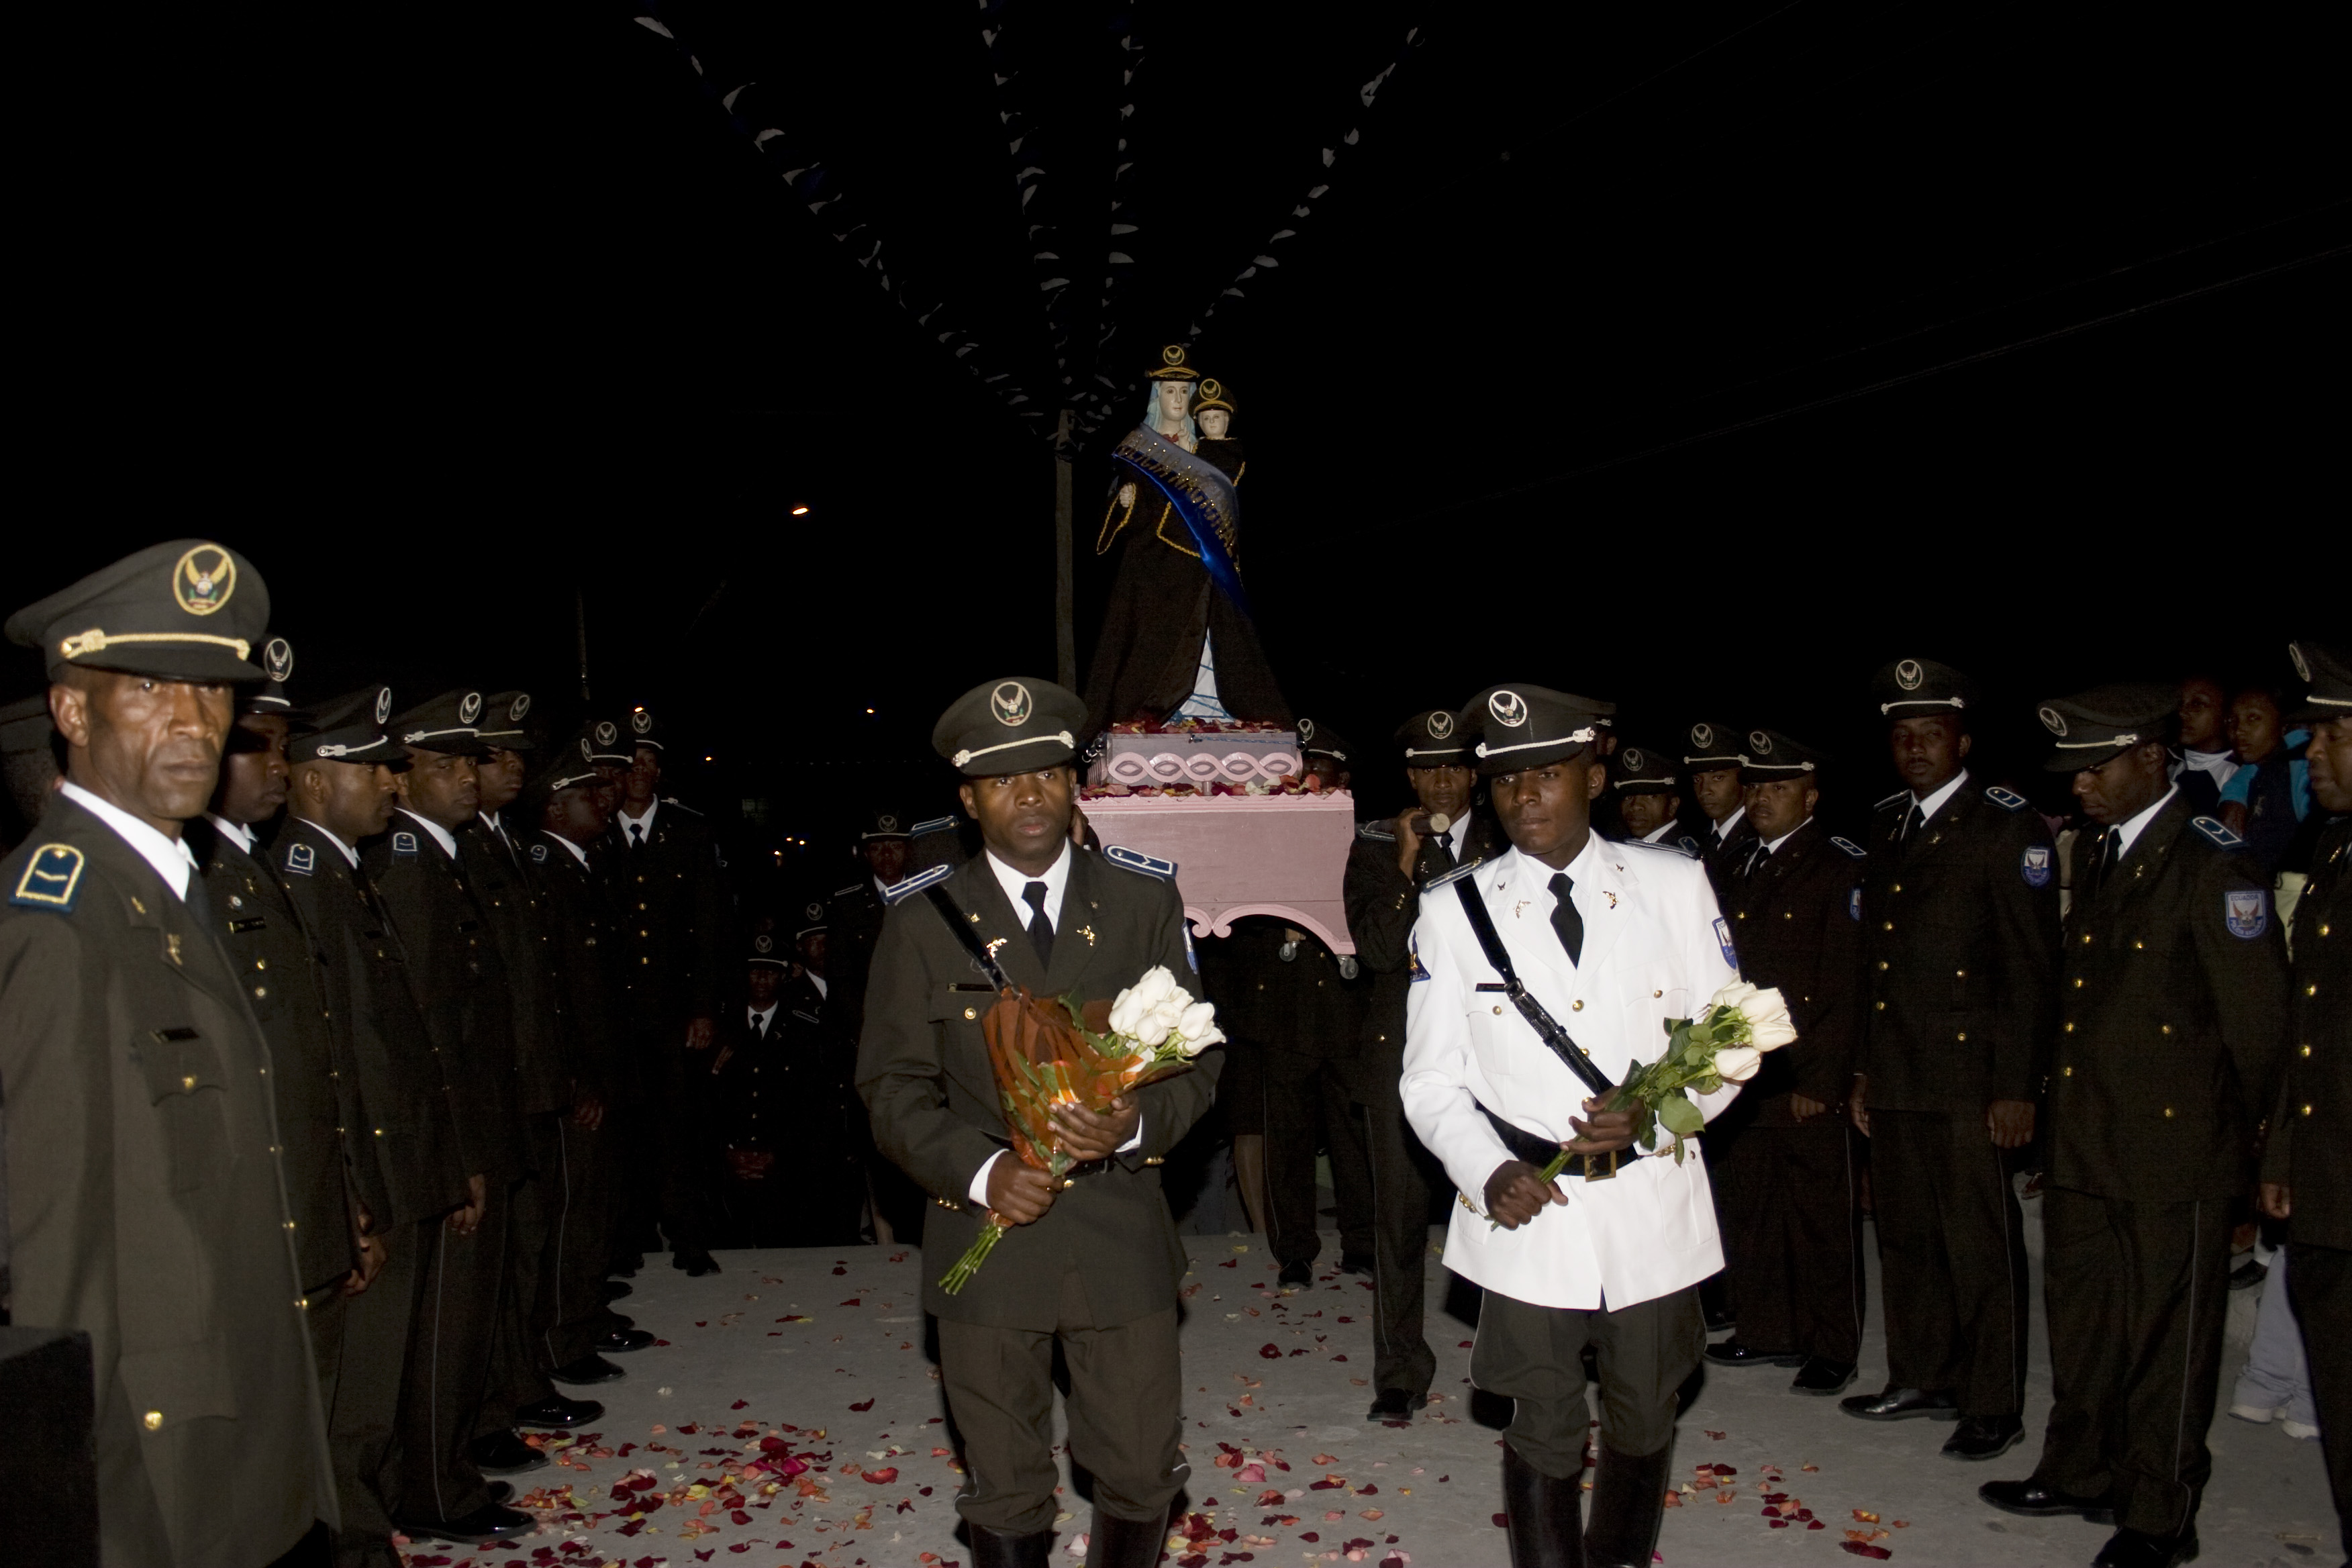 Celebration Virgen de las Nieves-Chota community. Community police pay tribute to the Virgen de las Nieves. 